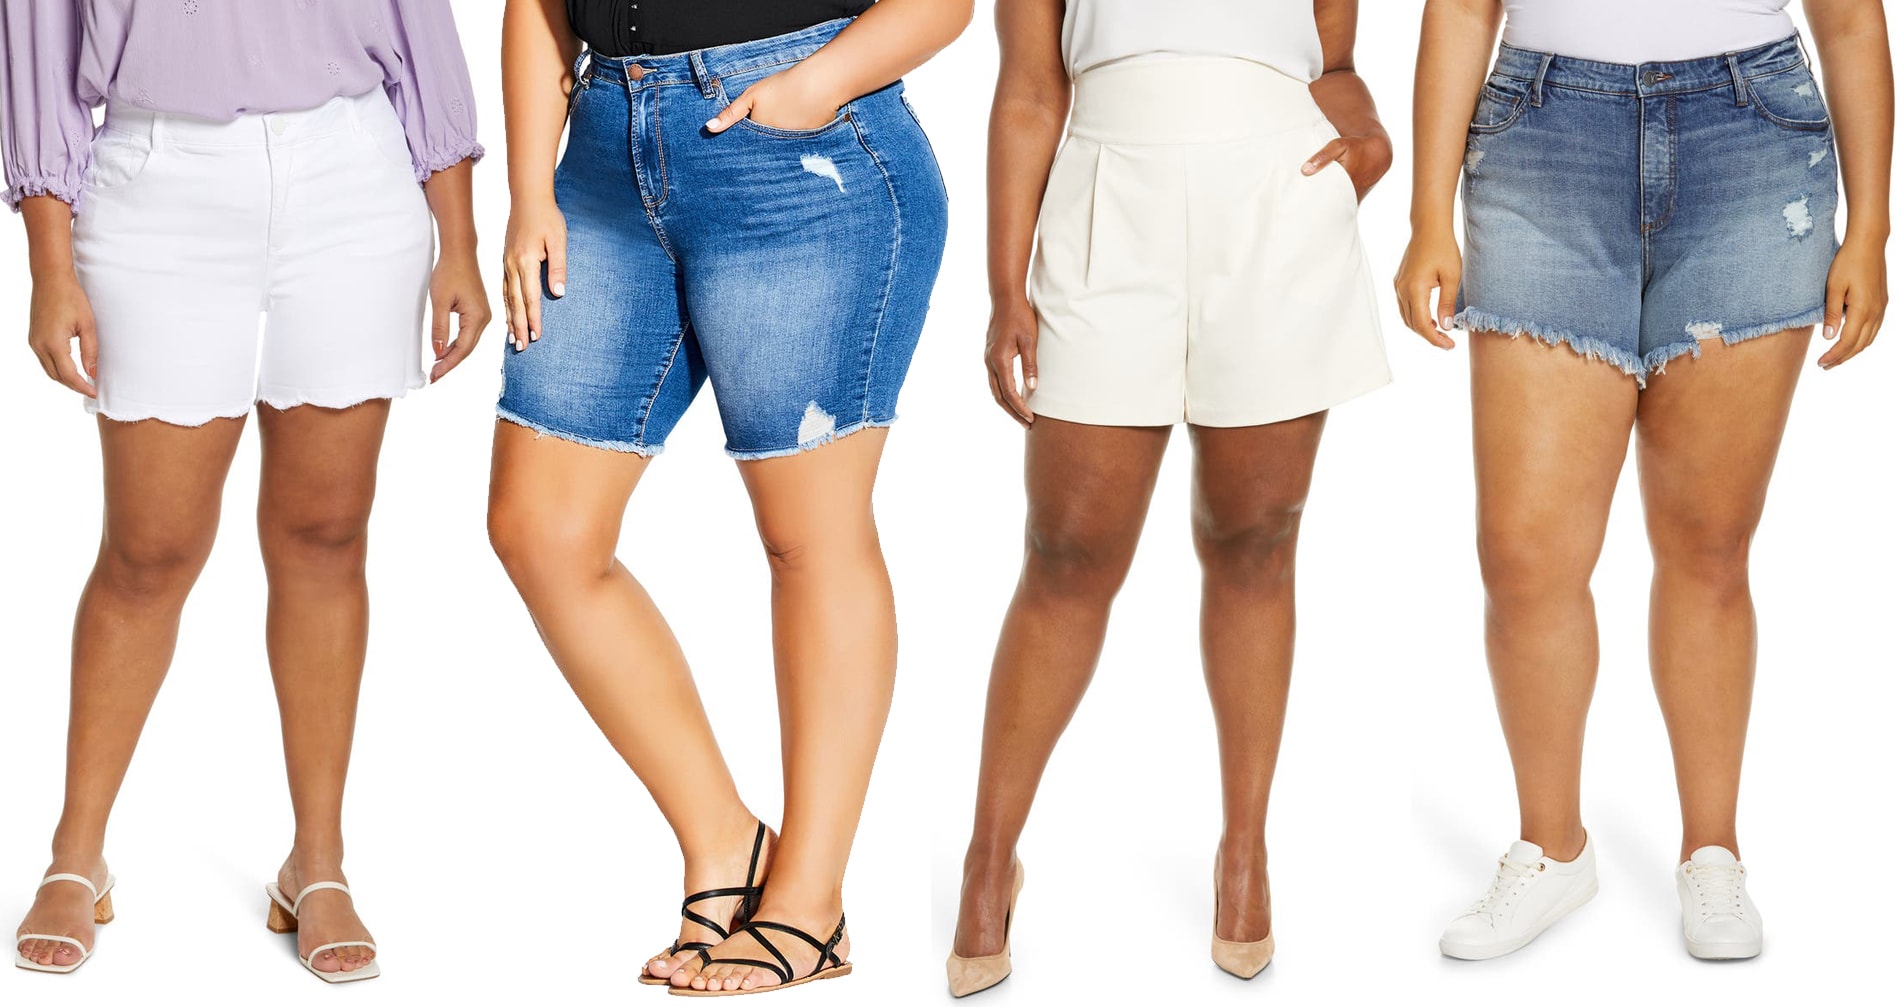 High-rise shorts are plus-size women's best friend